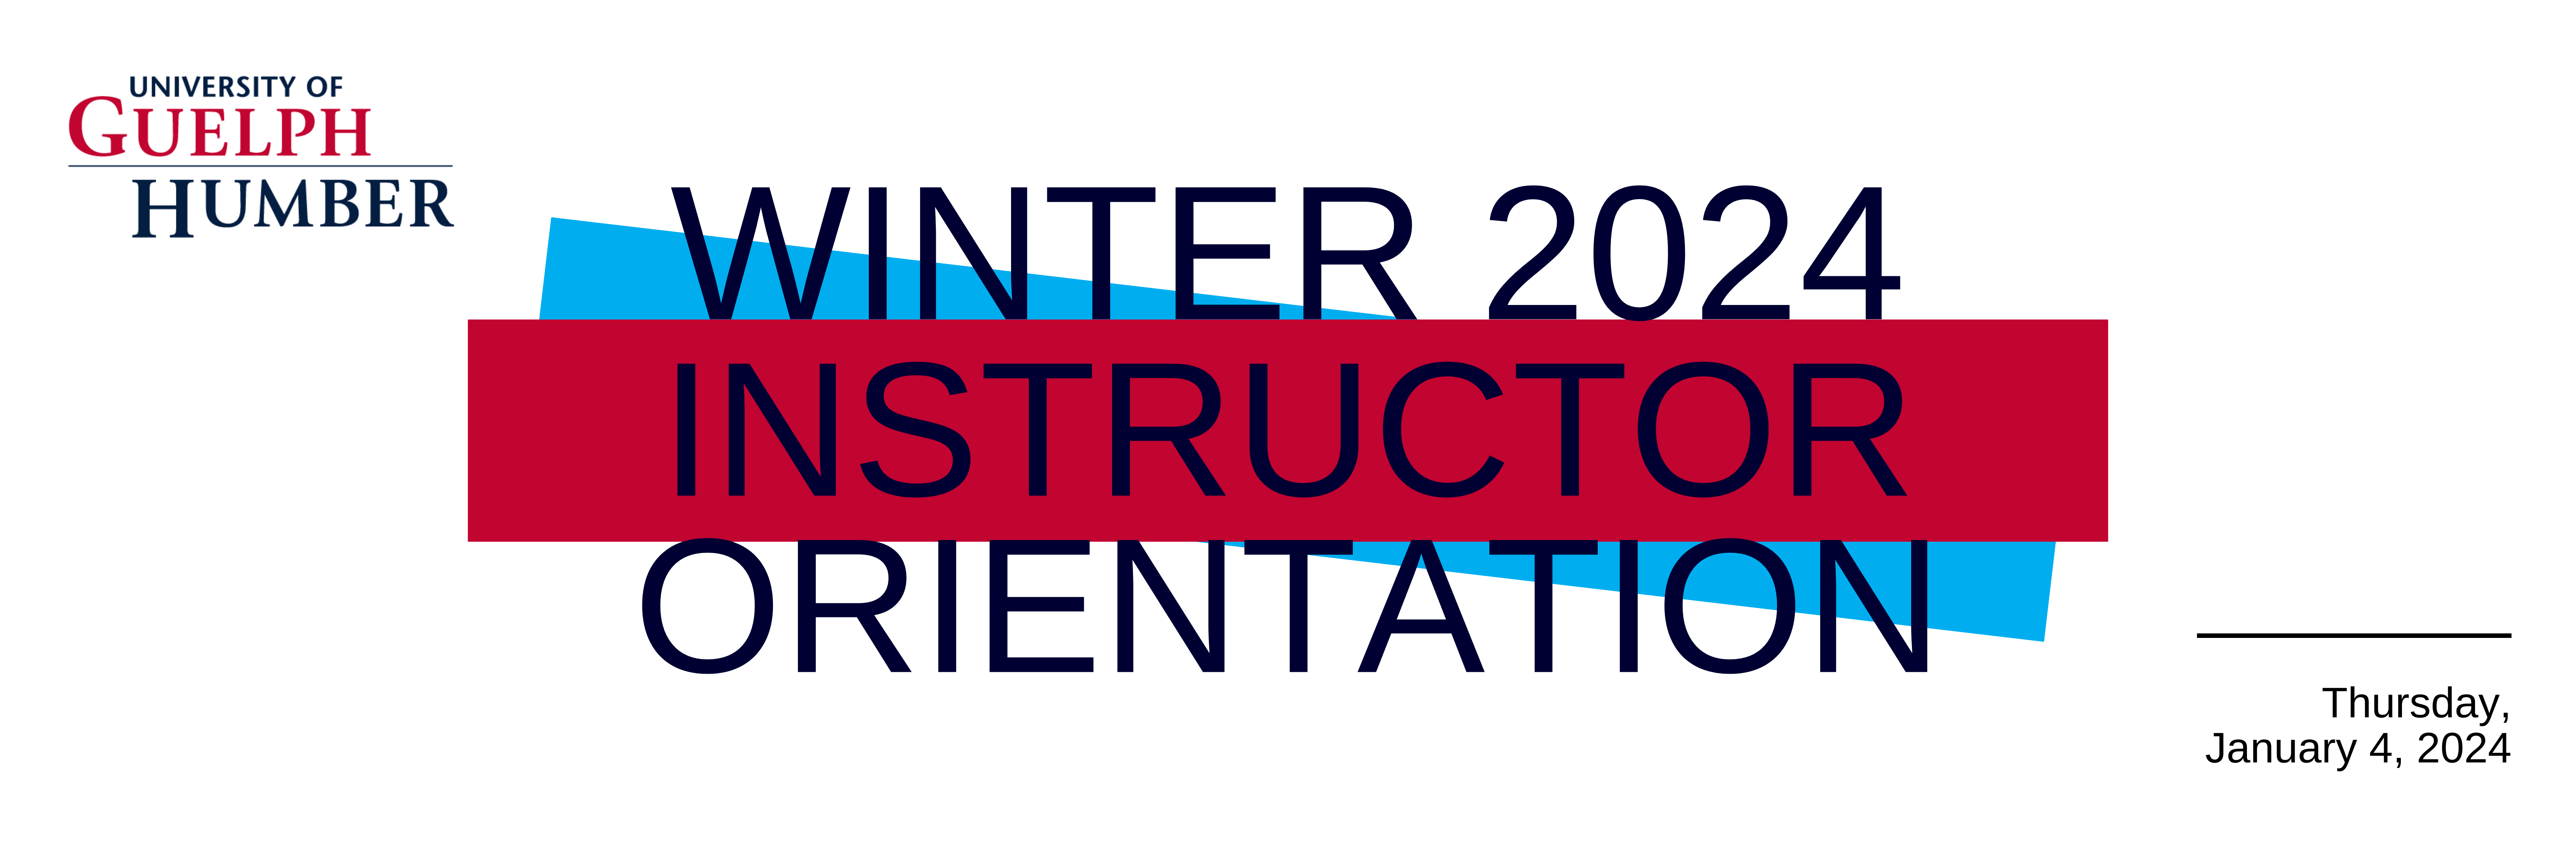 Winter Instructor Orientation Thurs Jan 4 2024